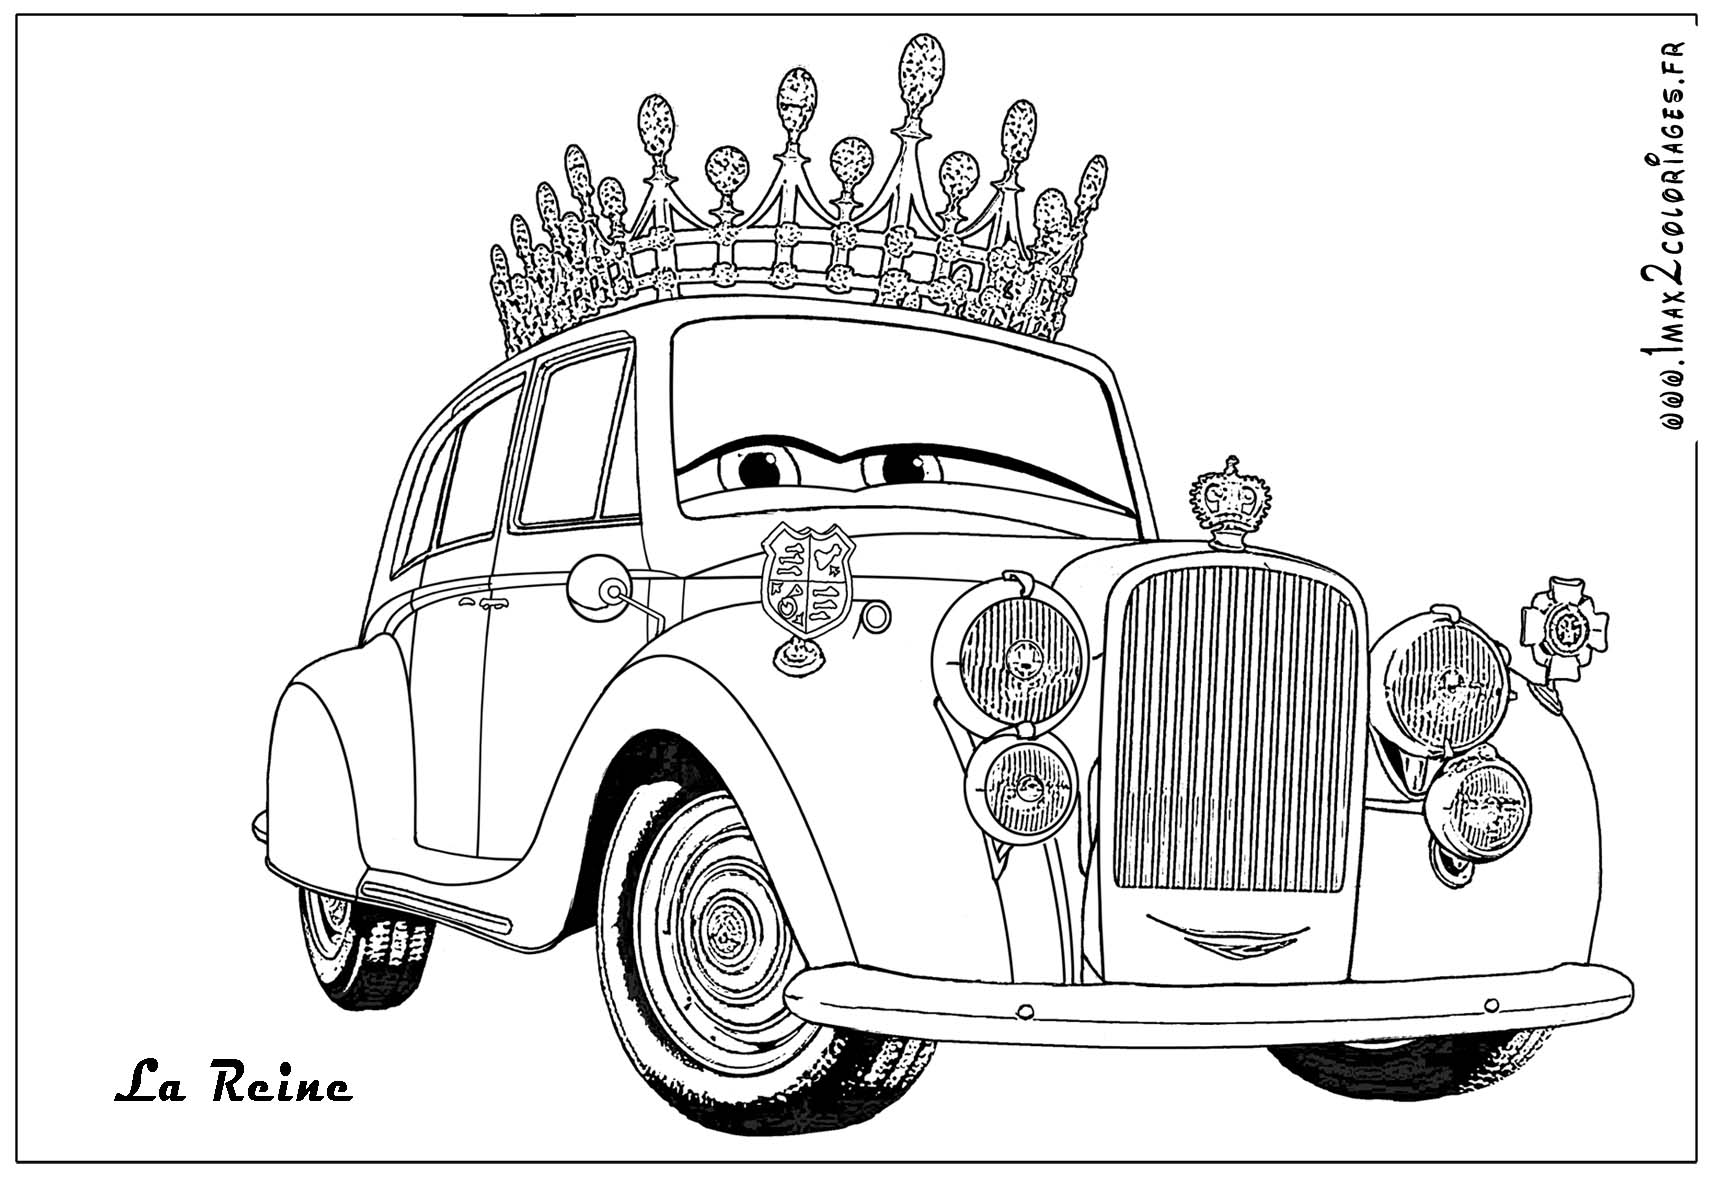 La reine d'Angleterre dans Cars 2 !